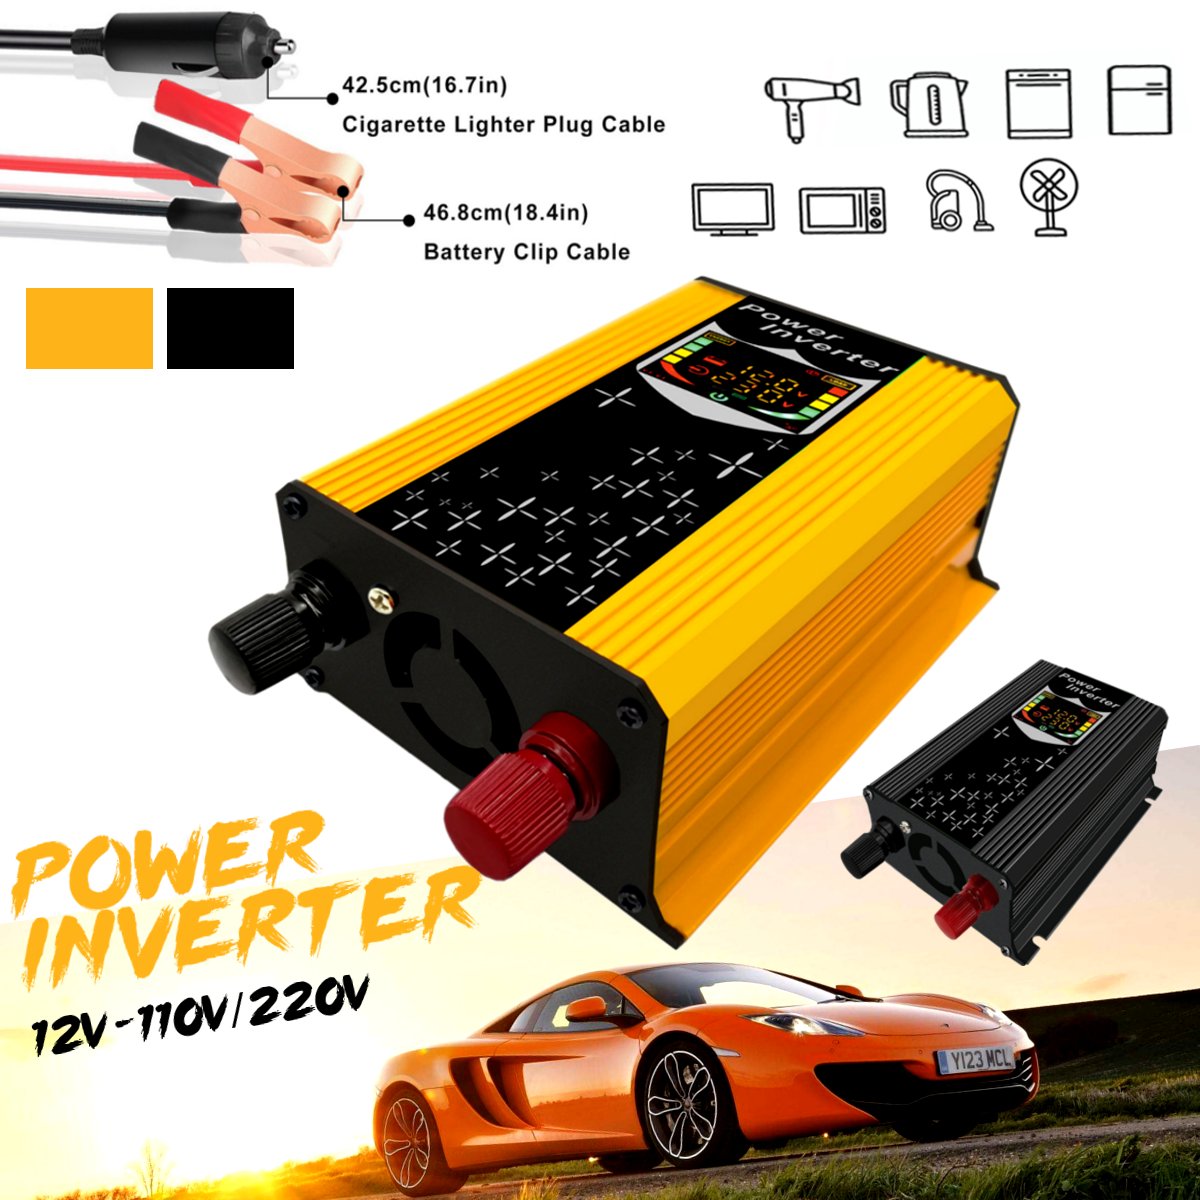  12V-110V/220V Dispaly Inverter 450W Power Inverter Car Modified Sine Wave Converter Solar Power Charger Inverter